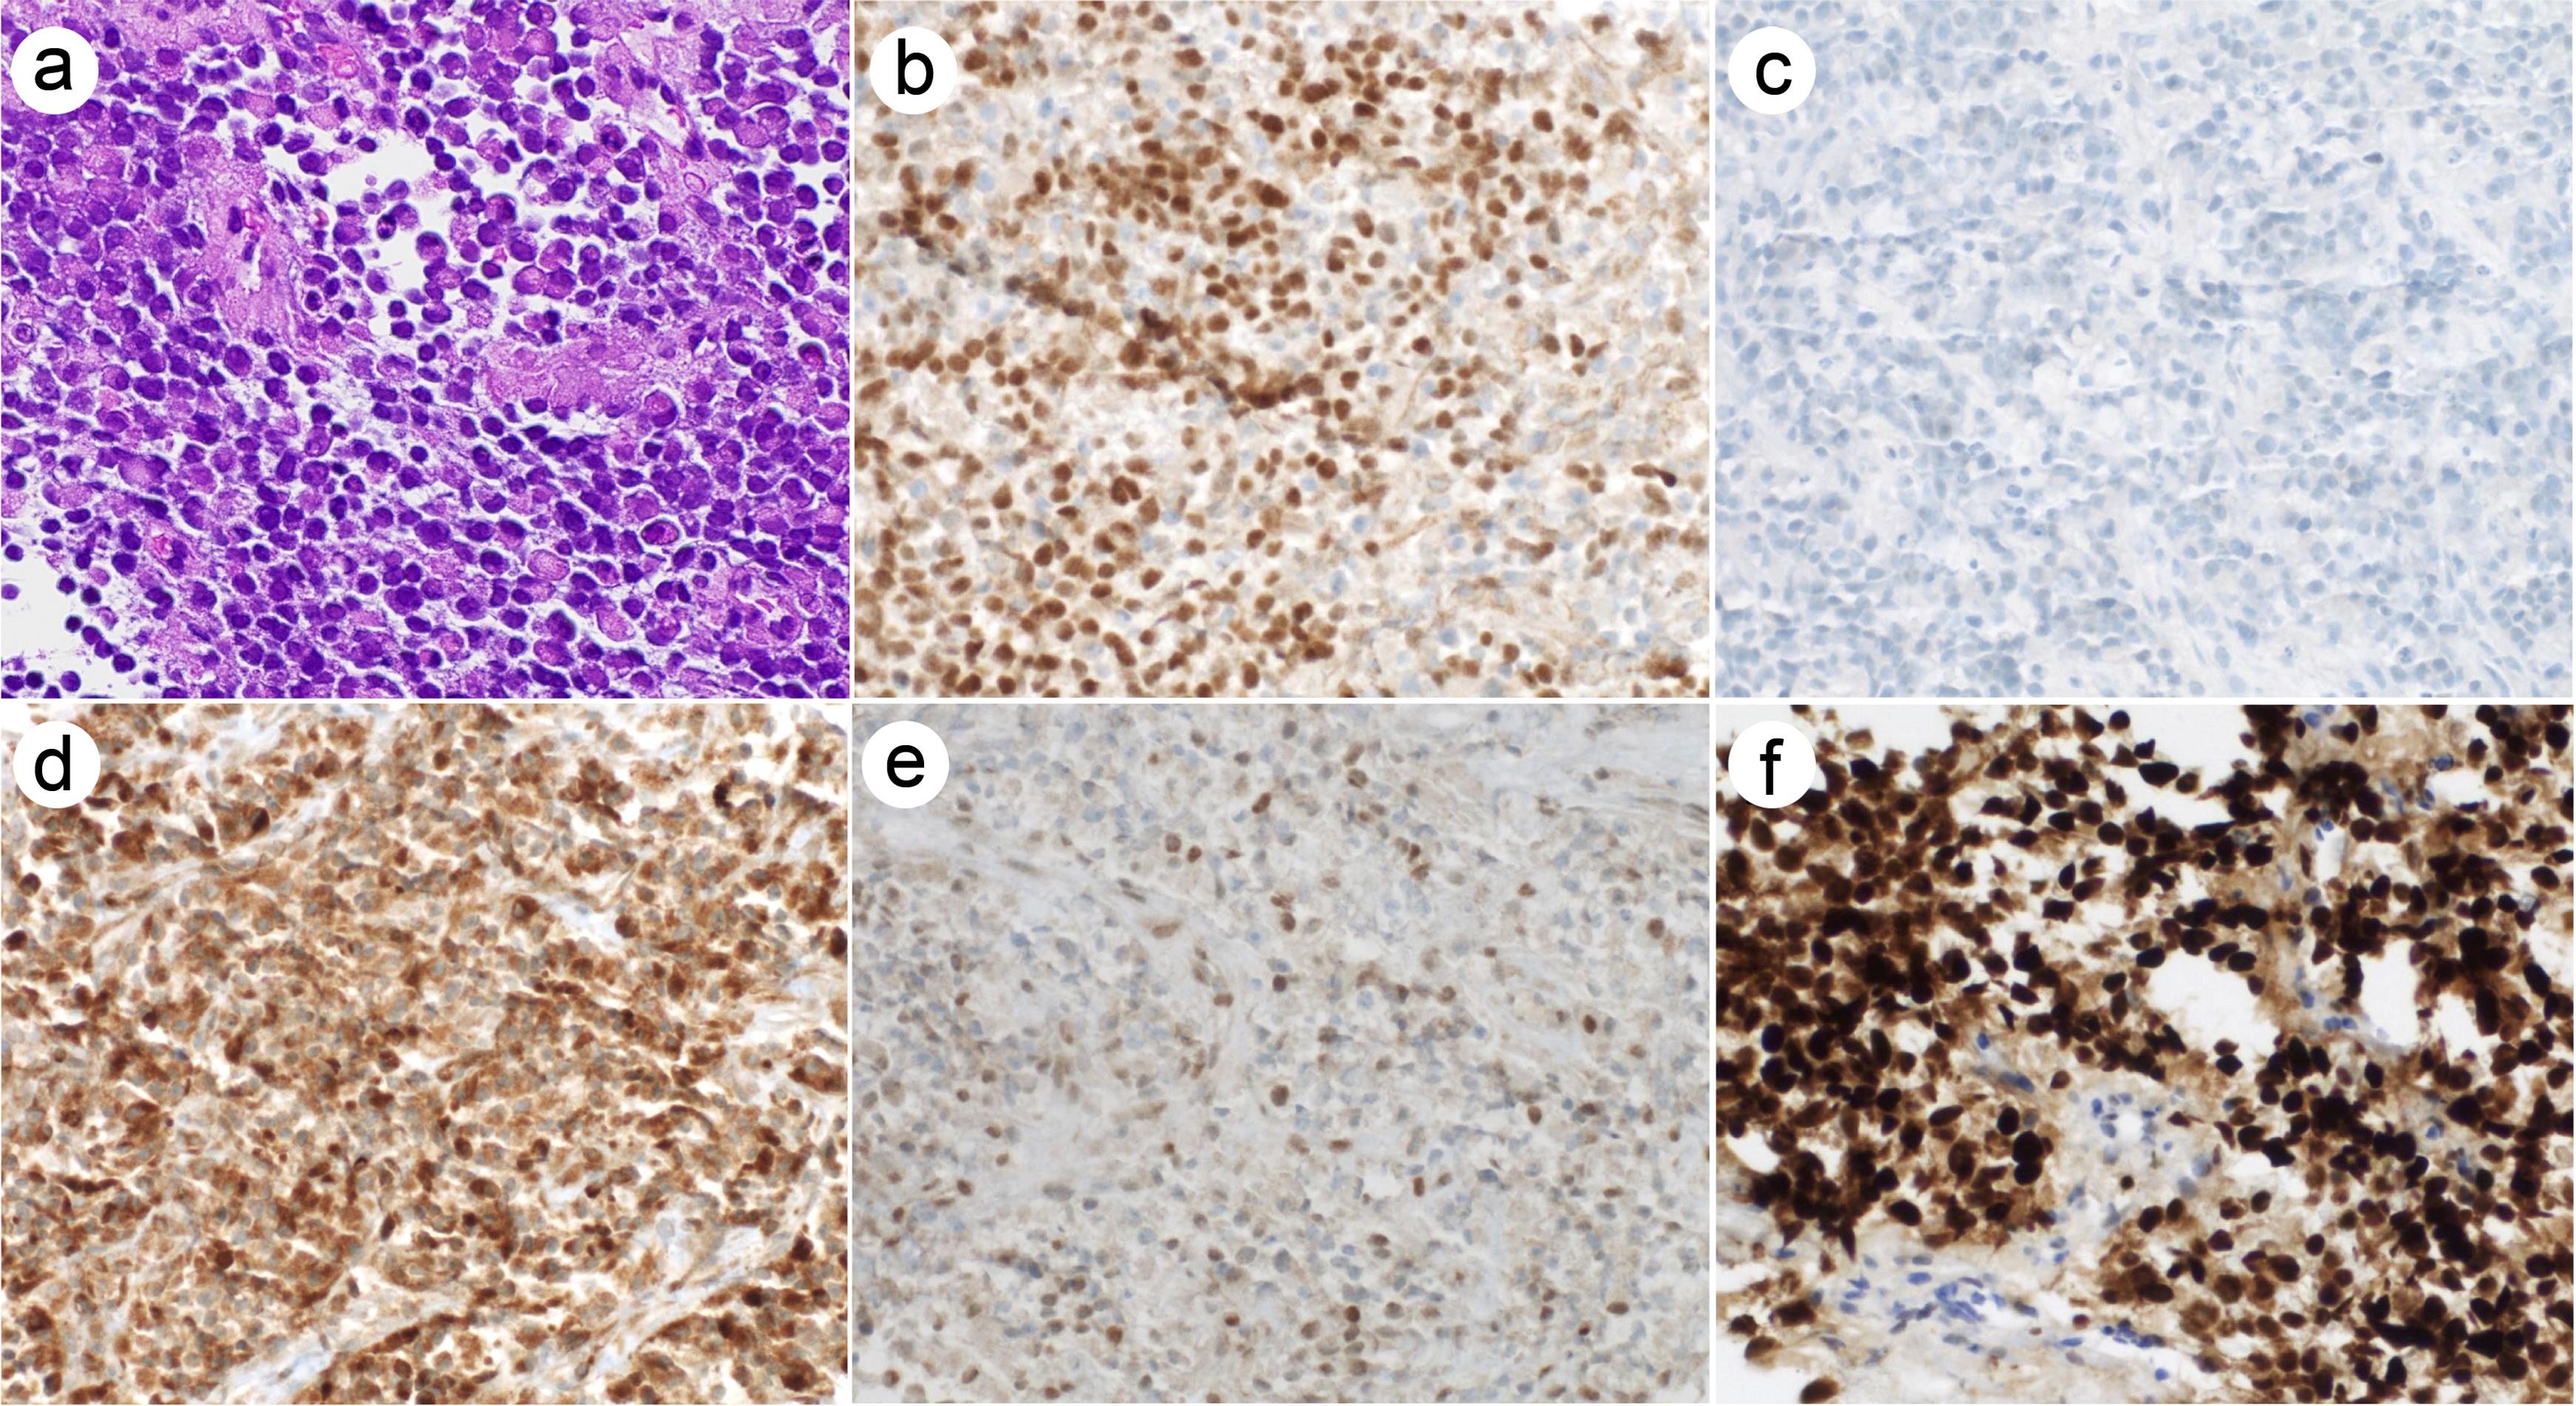 RMS in the initial supraclavicular lymph node biopsy mimicking B lymphoblastic lymphoma.